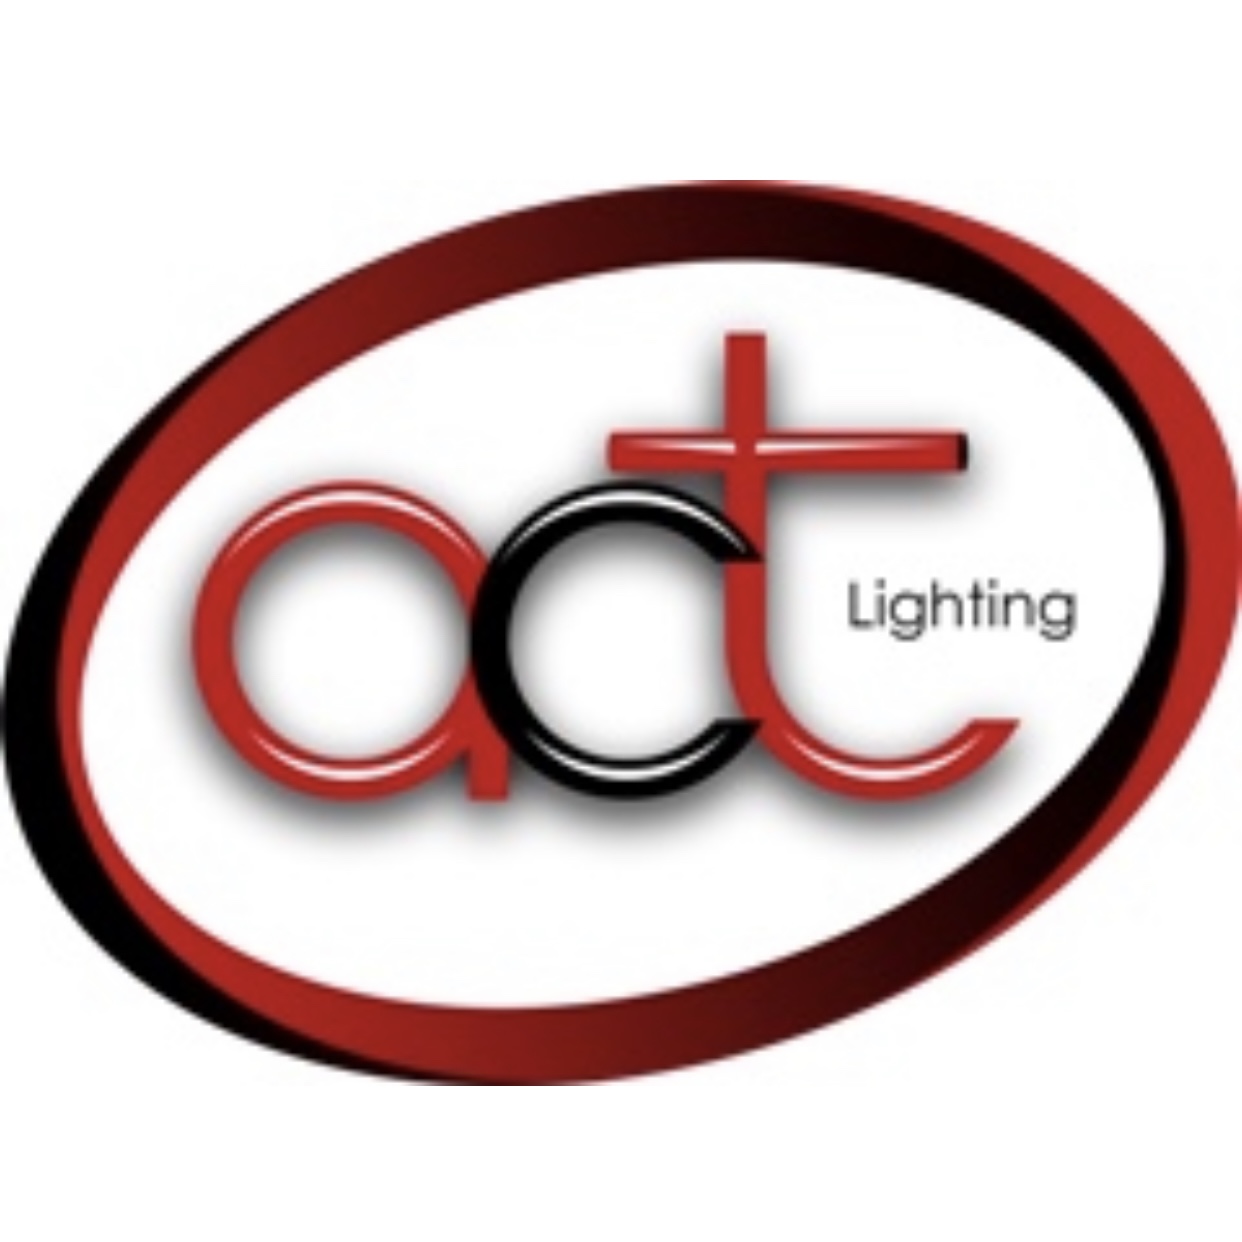 A.C.T. Lighting (USA & Canada)